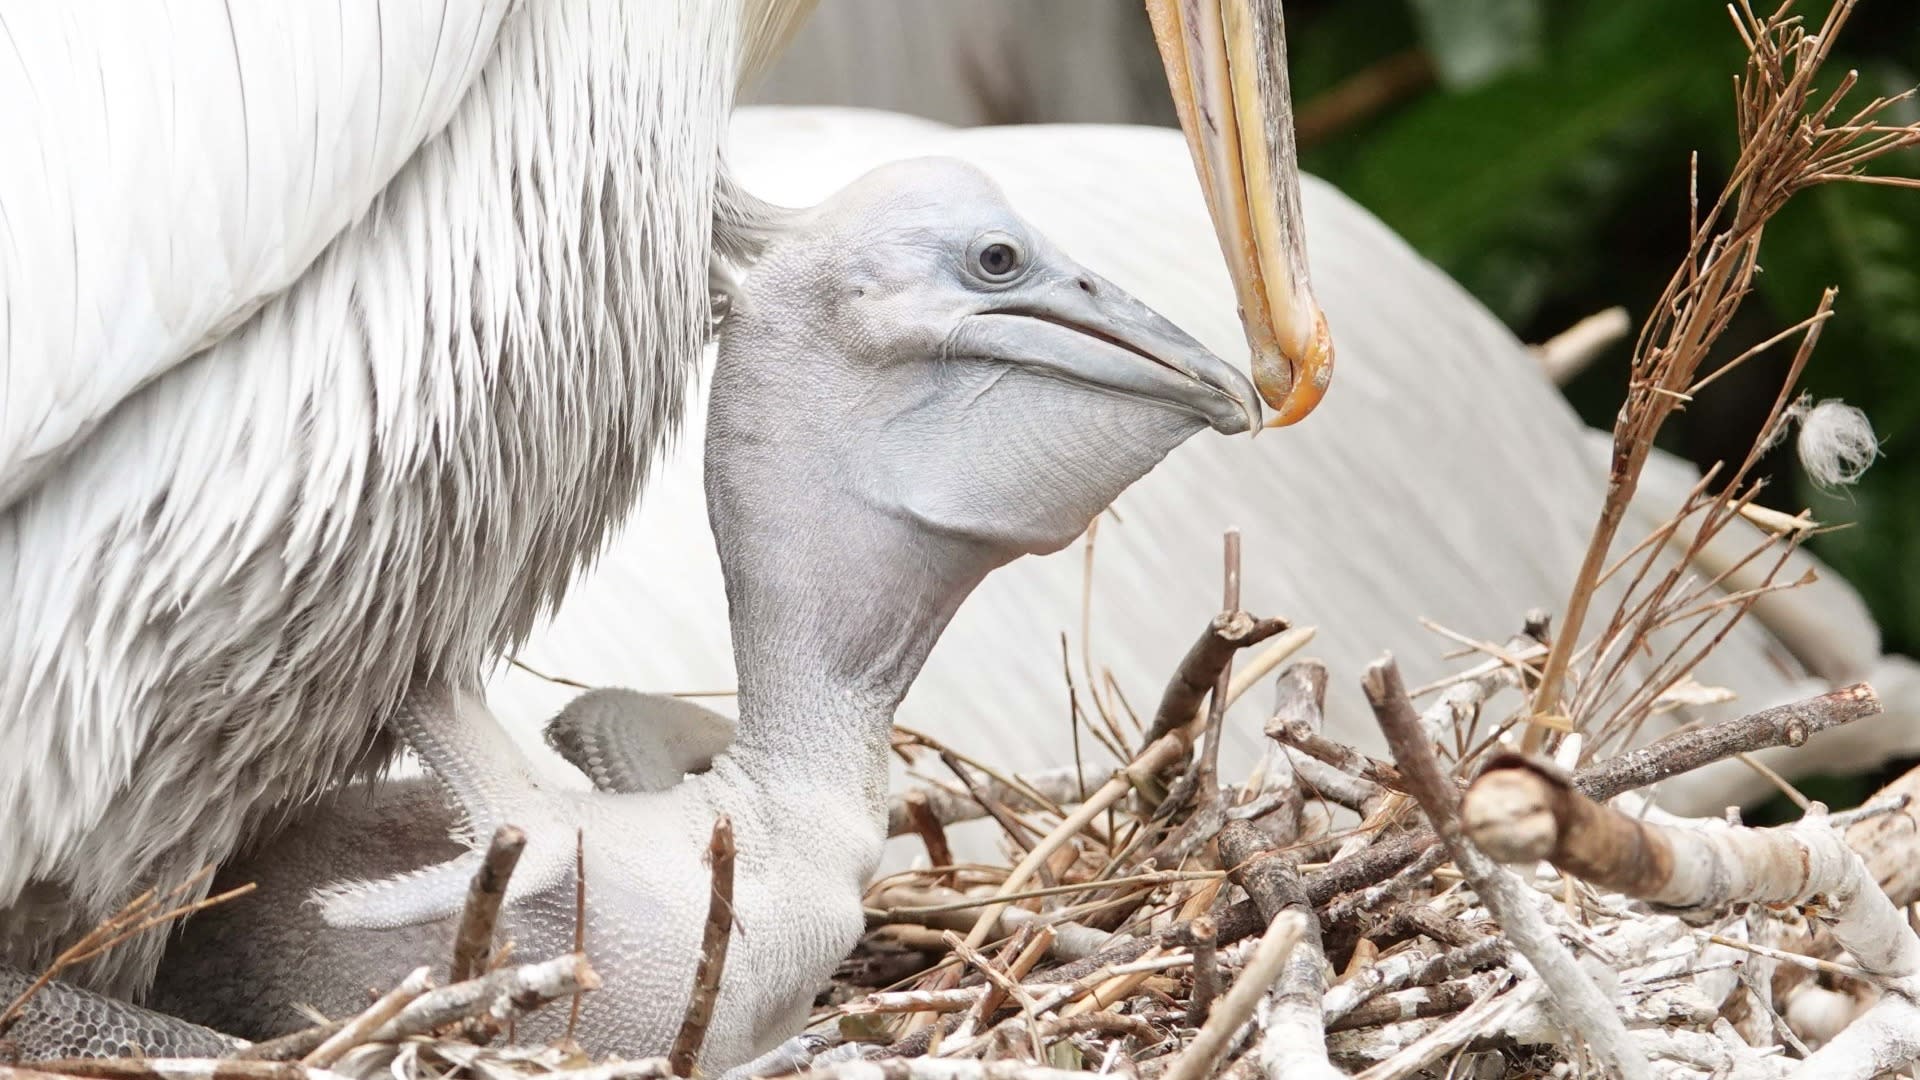 Pelikanenkuiken uit ei gekropen in DierenPark Amersfoort